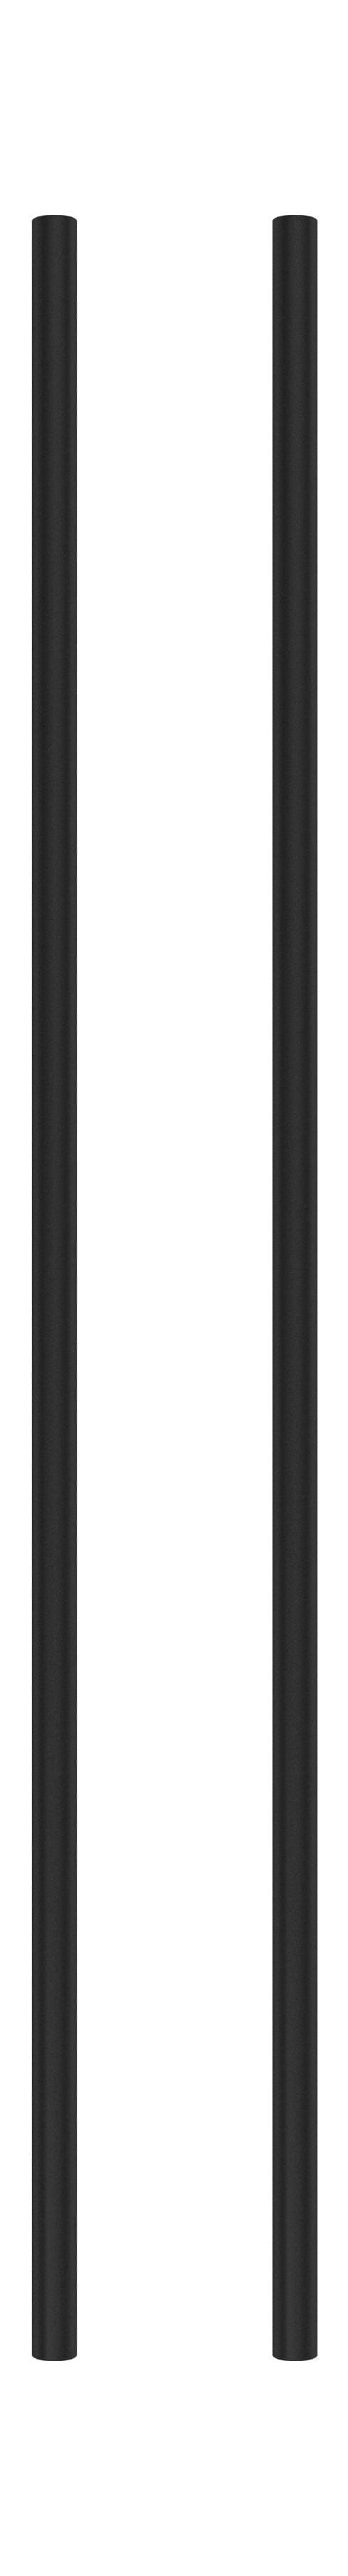 Sistema de estanterías Moebe/Lata de estantería de pared 85 cm Negro, conjunto de 2